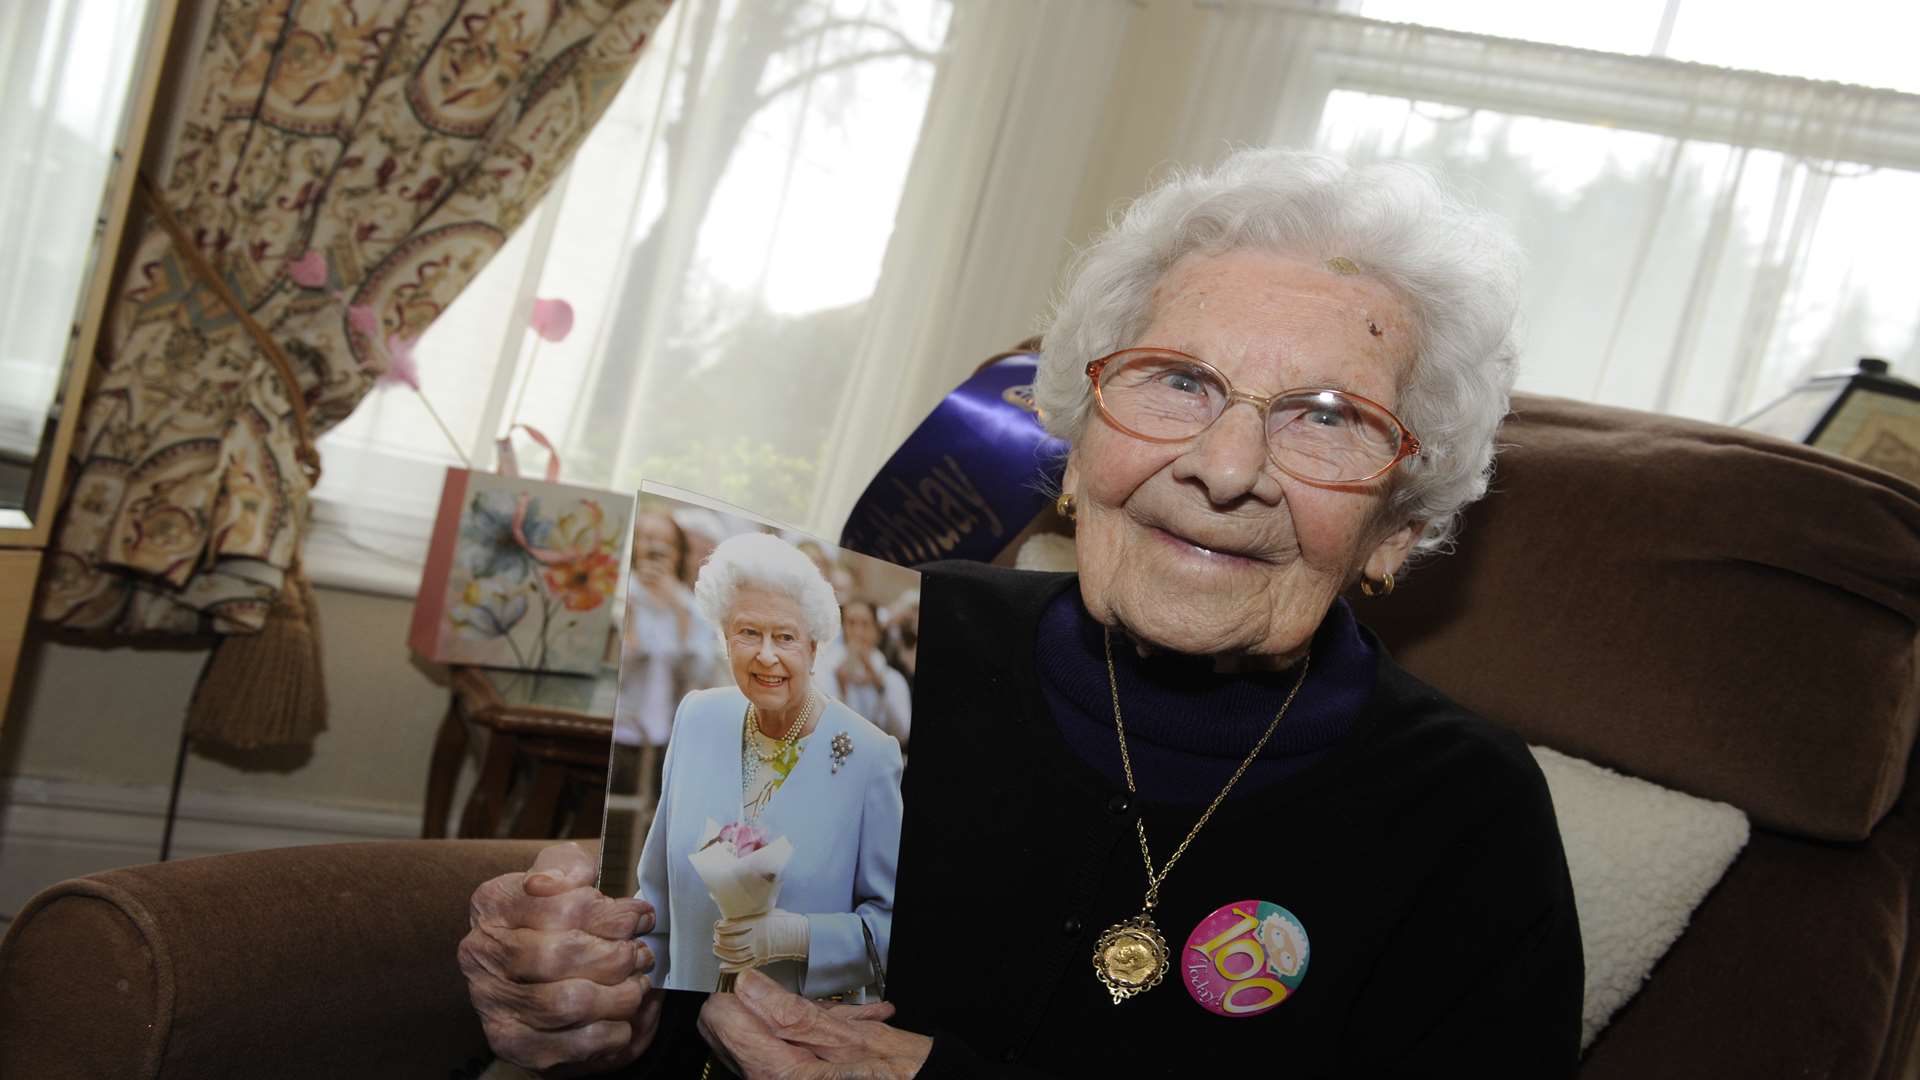 Doris Johnson celebrating her 100th birthday.